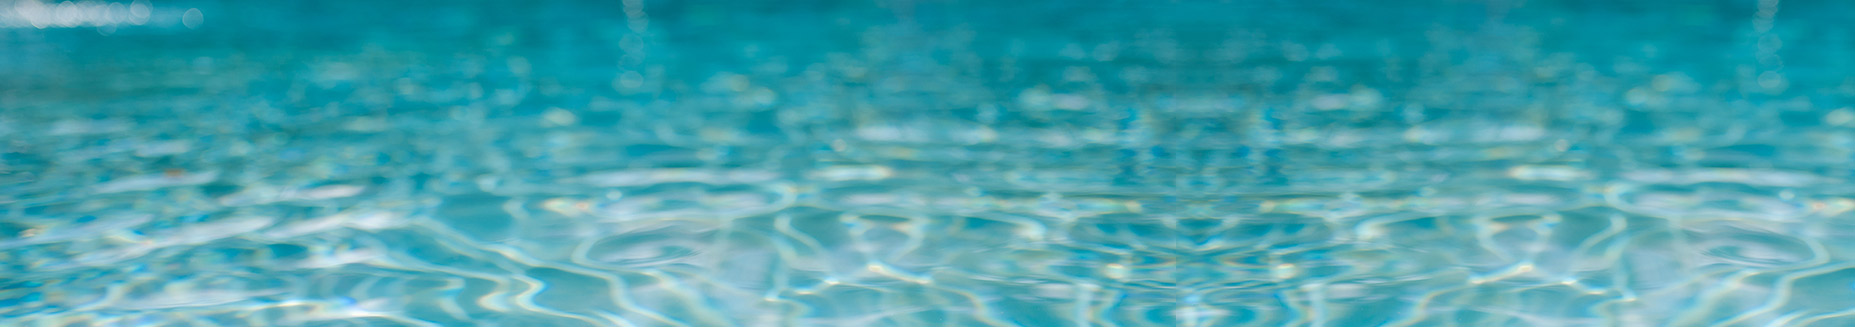 Image of pool-water